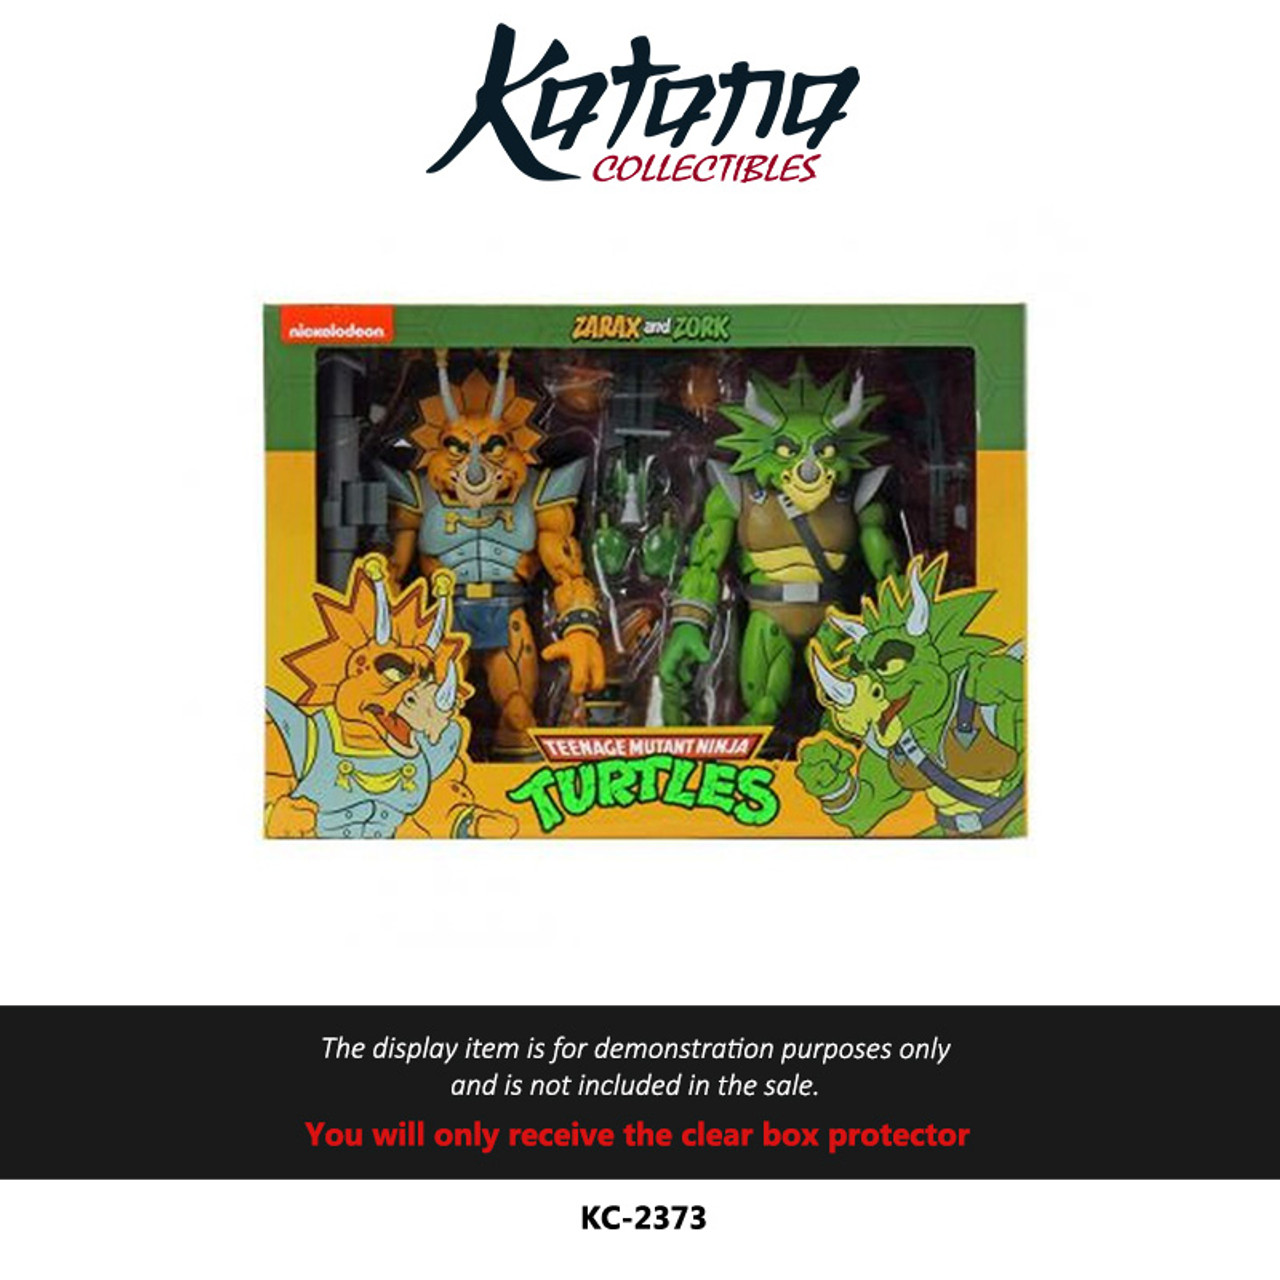 Katana Collectibles Protector For Teenage Mutant Ninja Turtles 2-Pack Zarak & Zork Figures